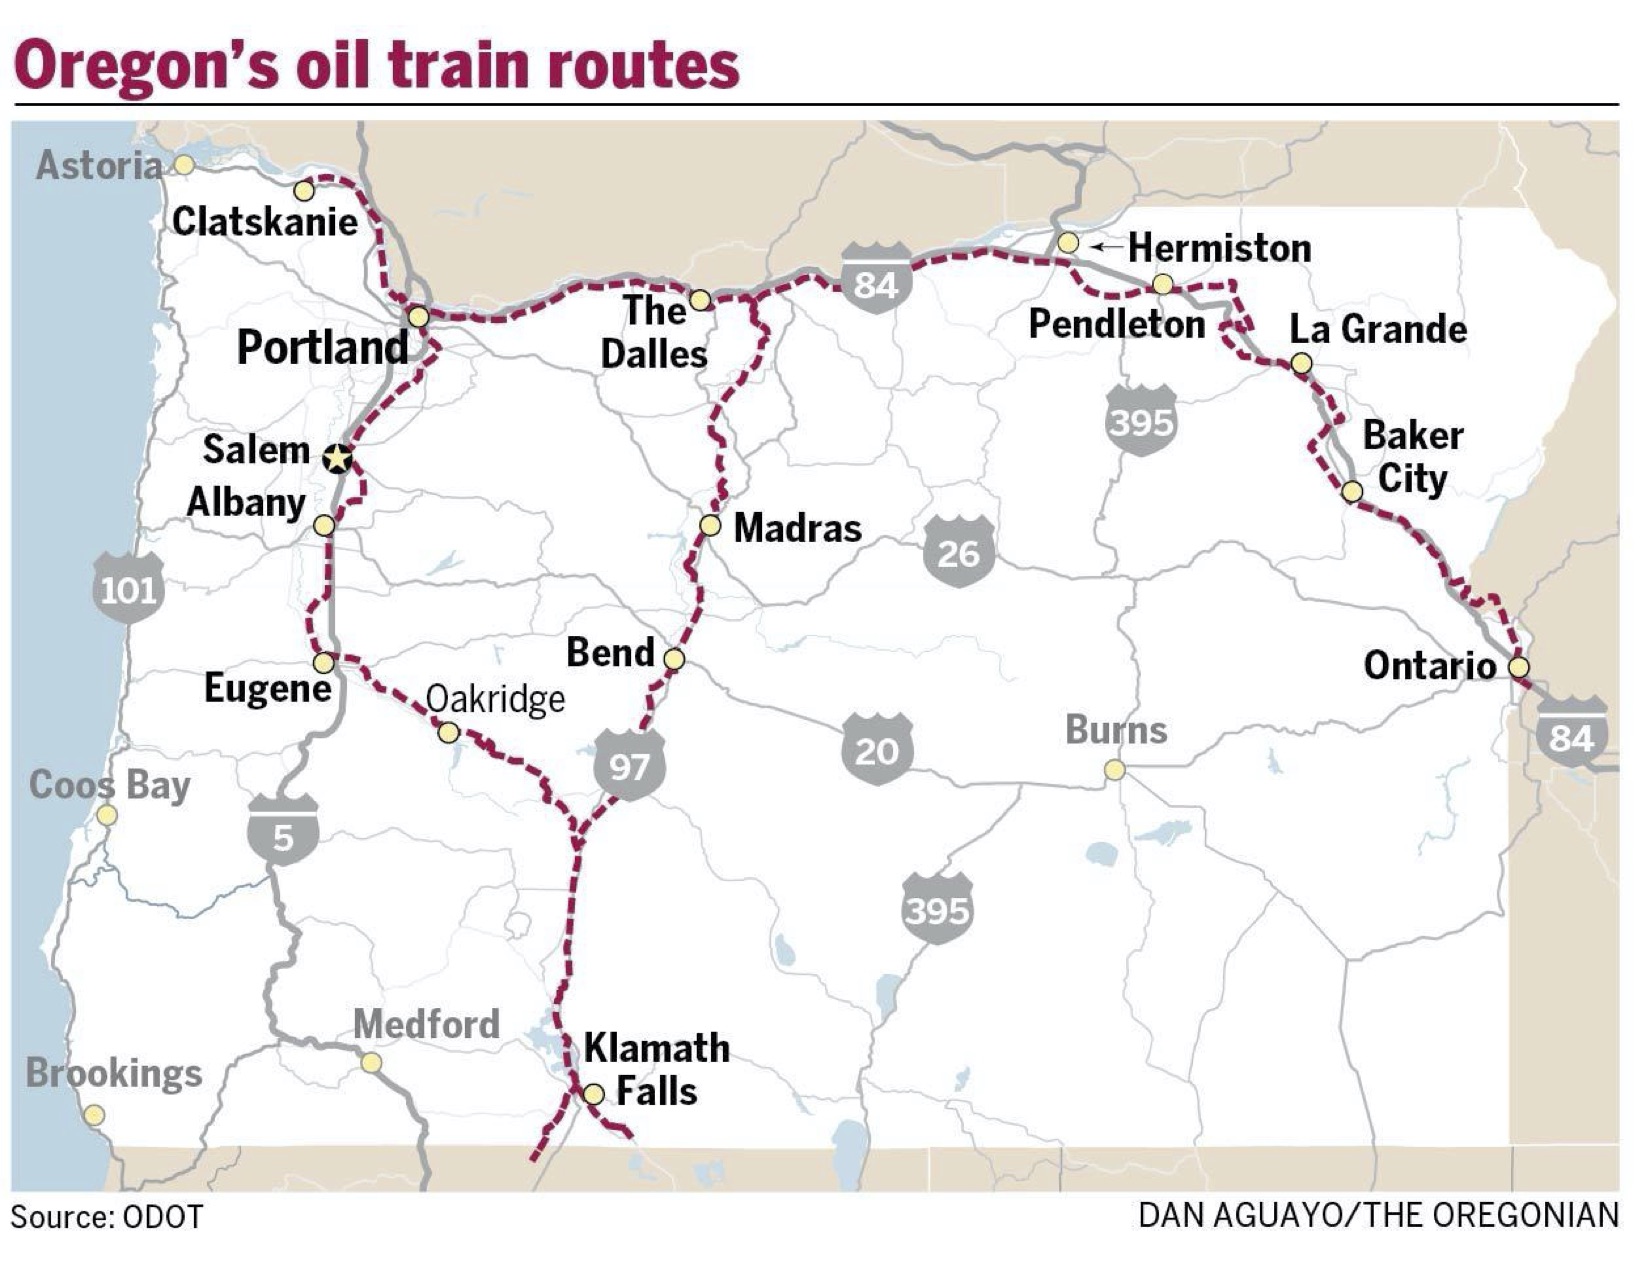 Oregon's Oil Train Routes